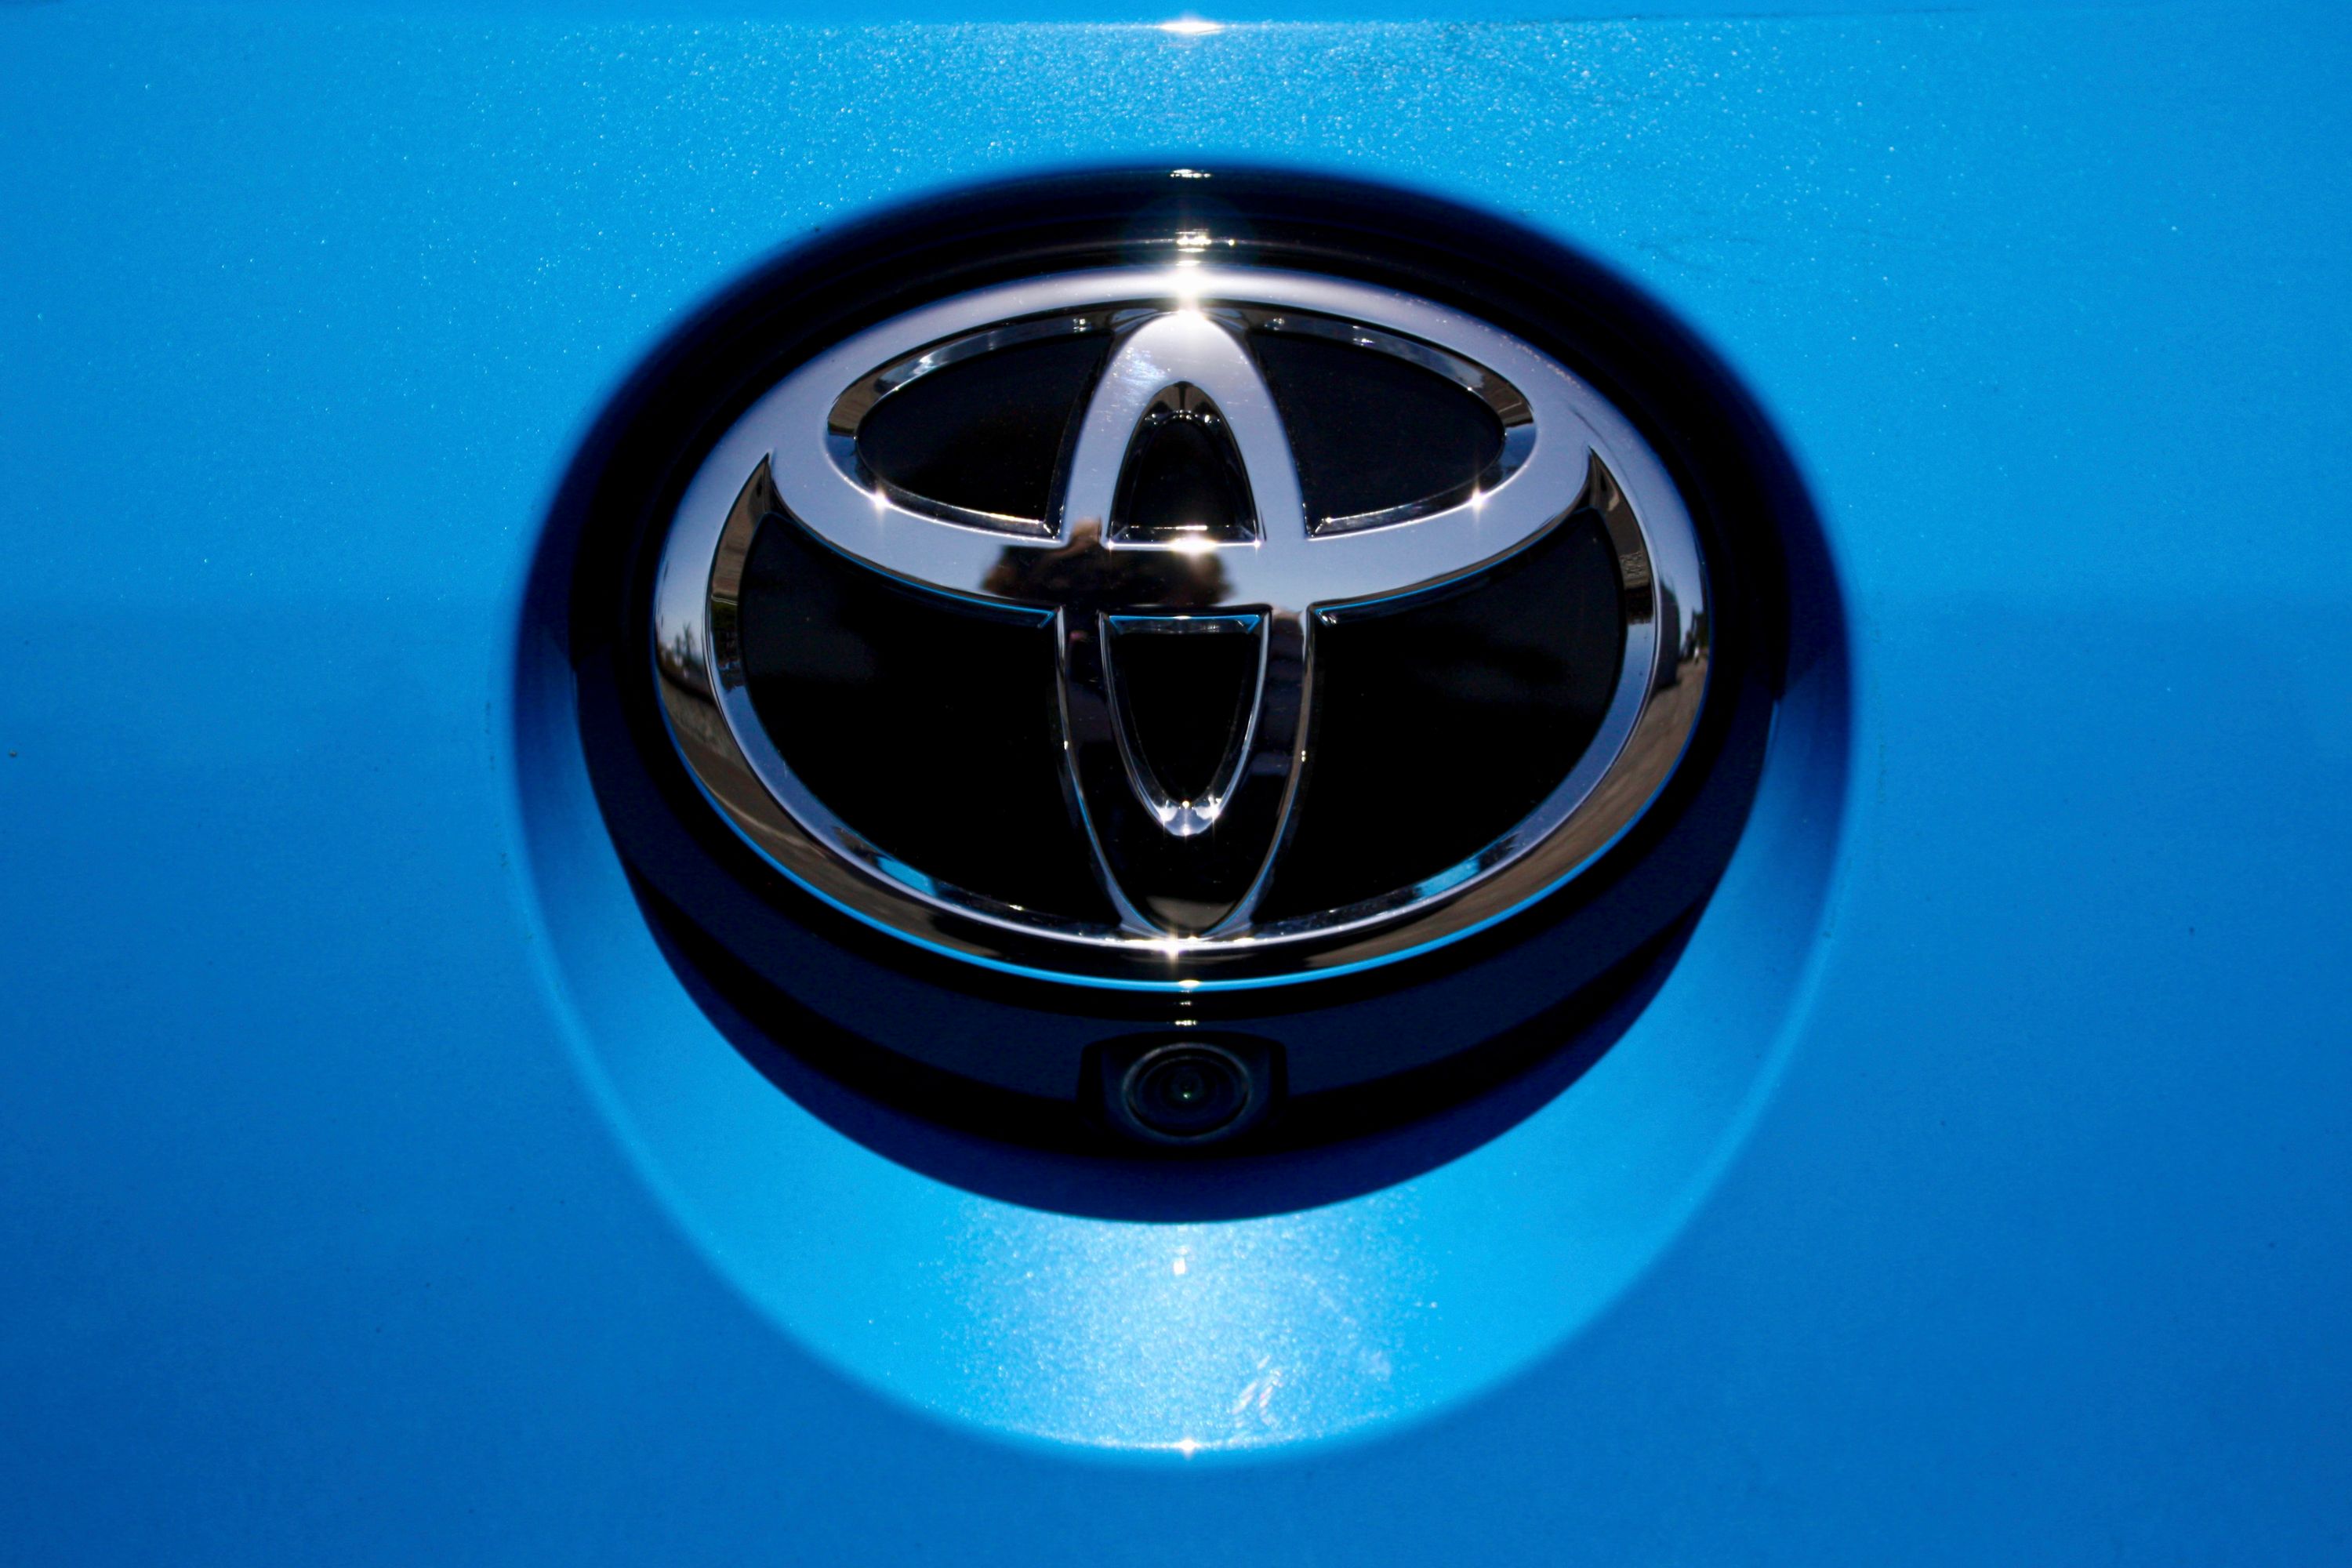 2019 Toyota Corolla Hatchback - Driven